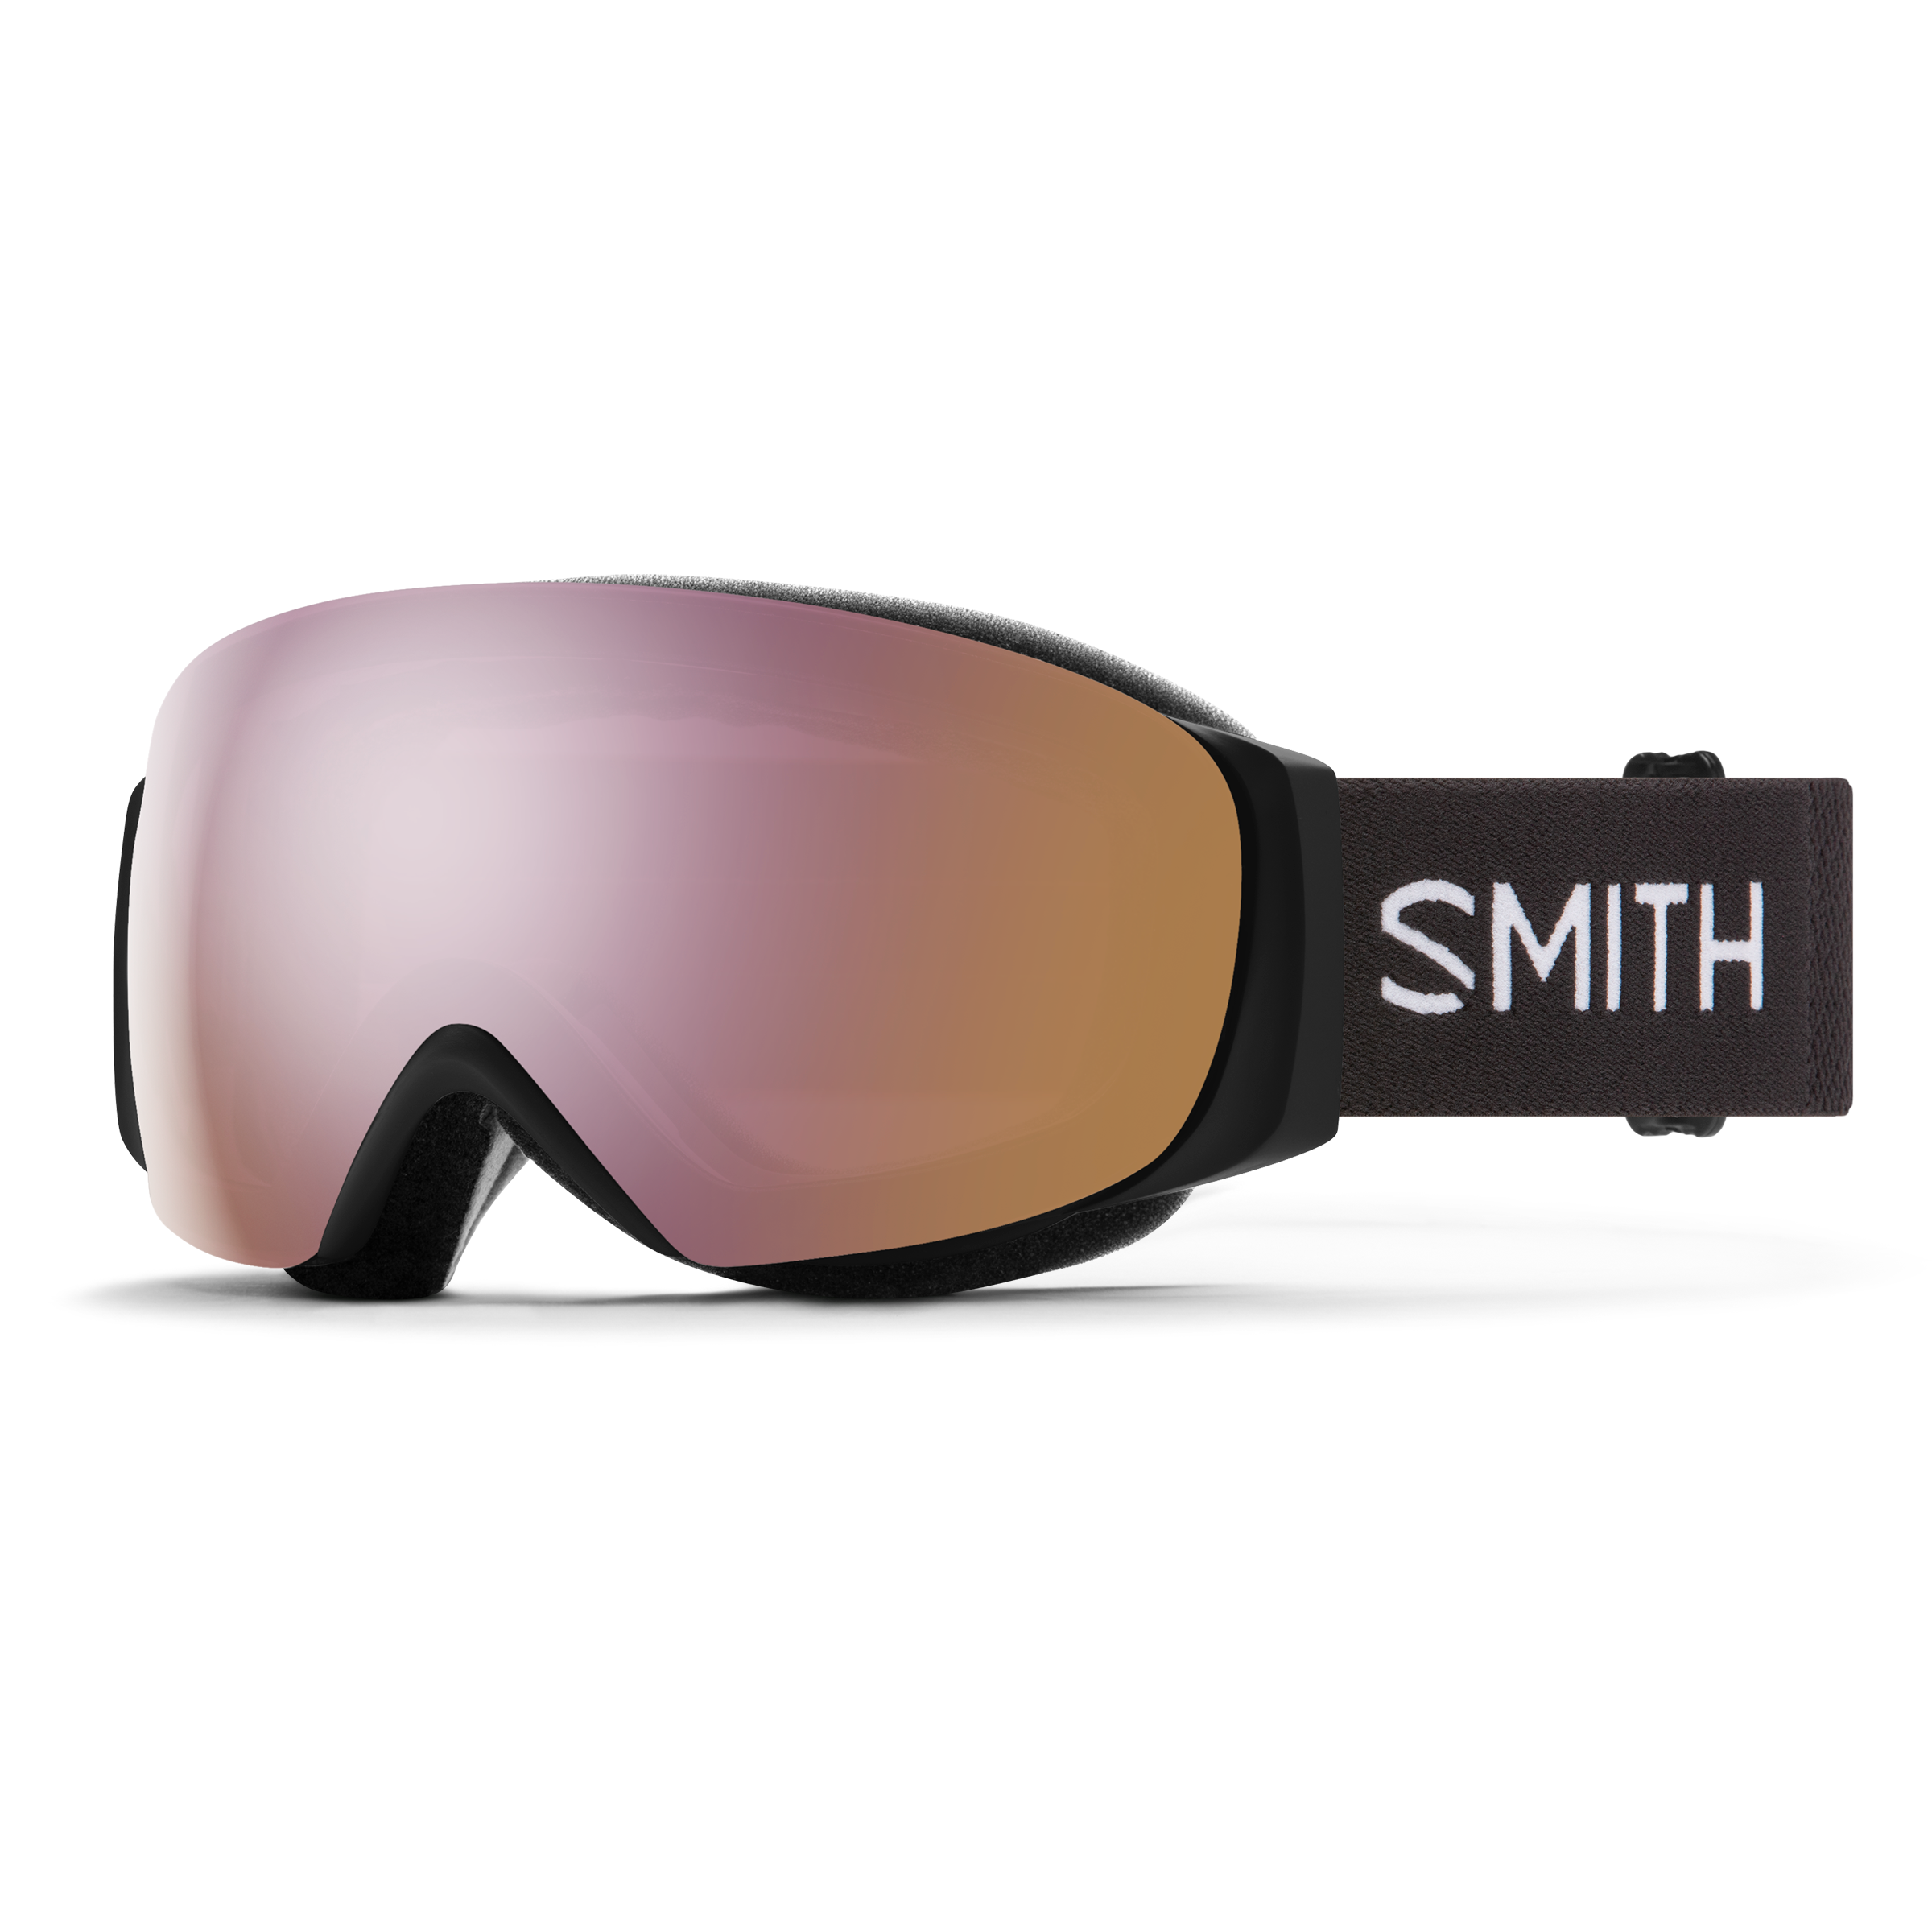 Ski & Snowboard Goggles - Best Snow Goggles | Smith Optics